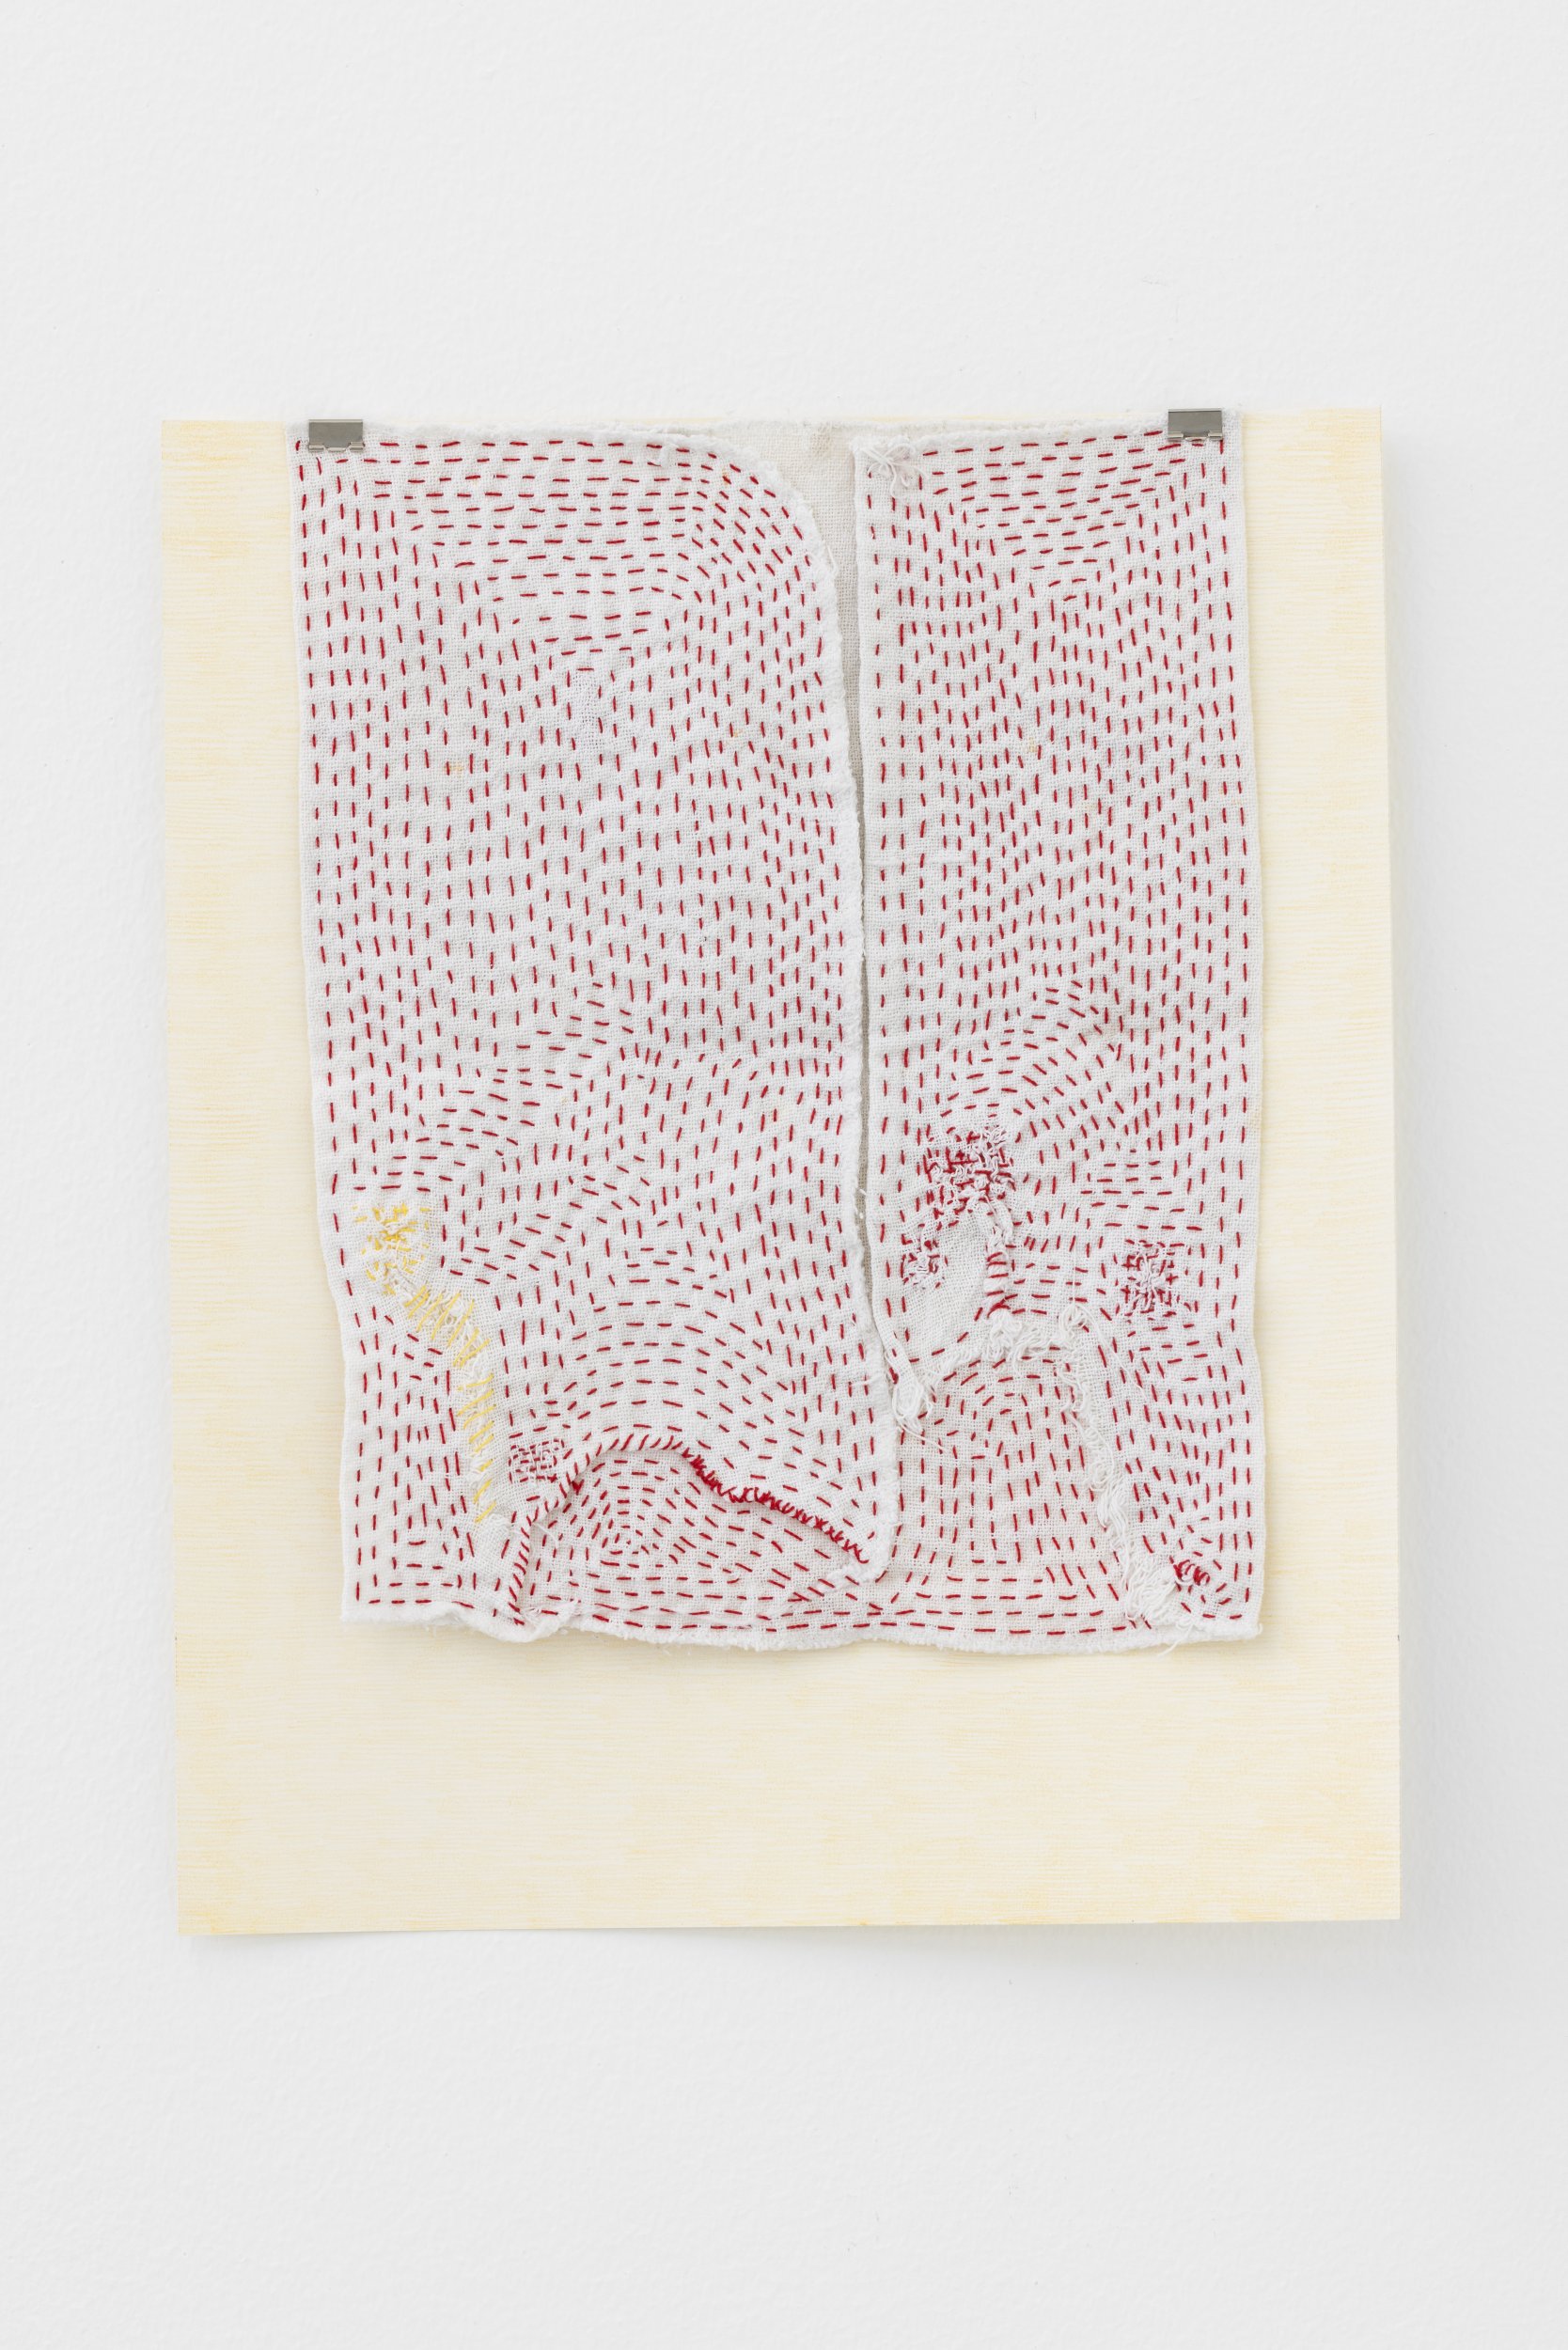 Gabriela Albergaria, Têxteis #11, 2023. Repurposed textiles with sashiko embroidery, cotton thread, color pencil on paper, drawing paper. 42 x 34 cm. Unique
